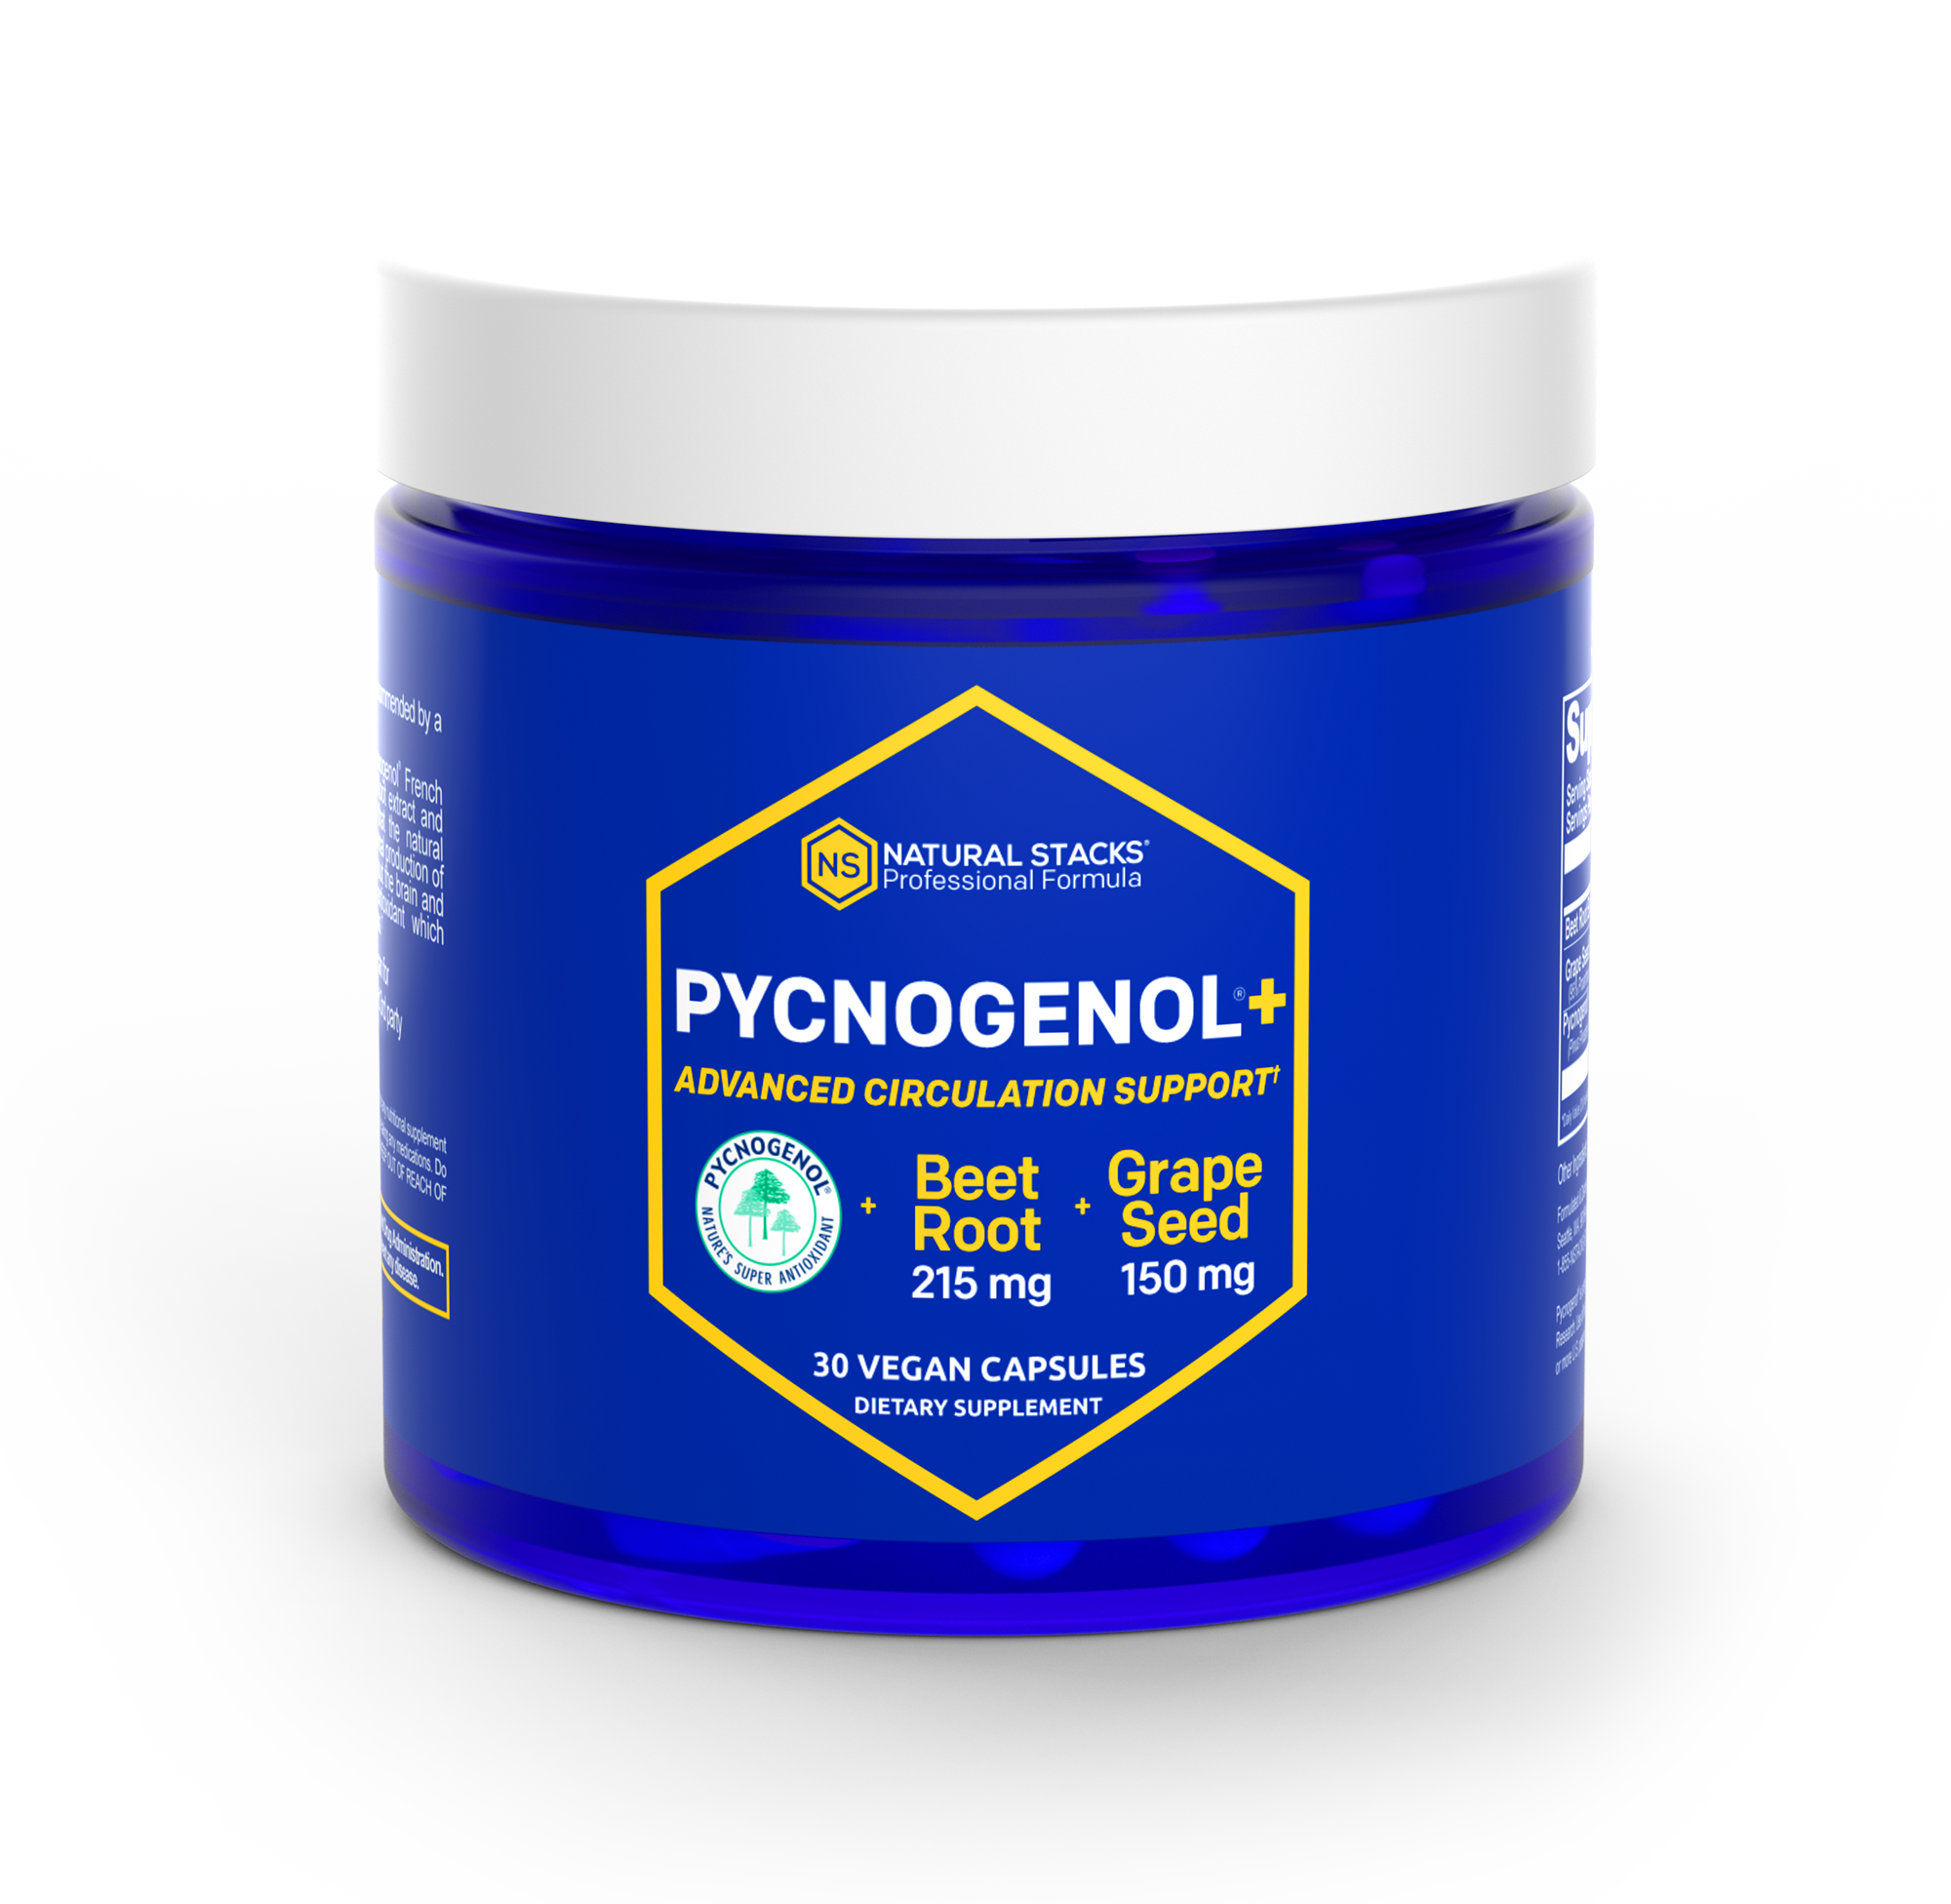 Pycnogenol+